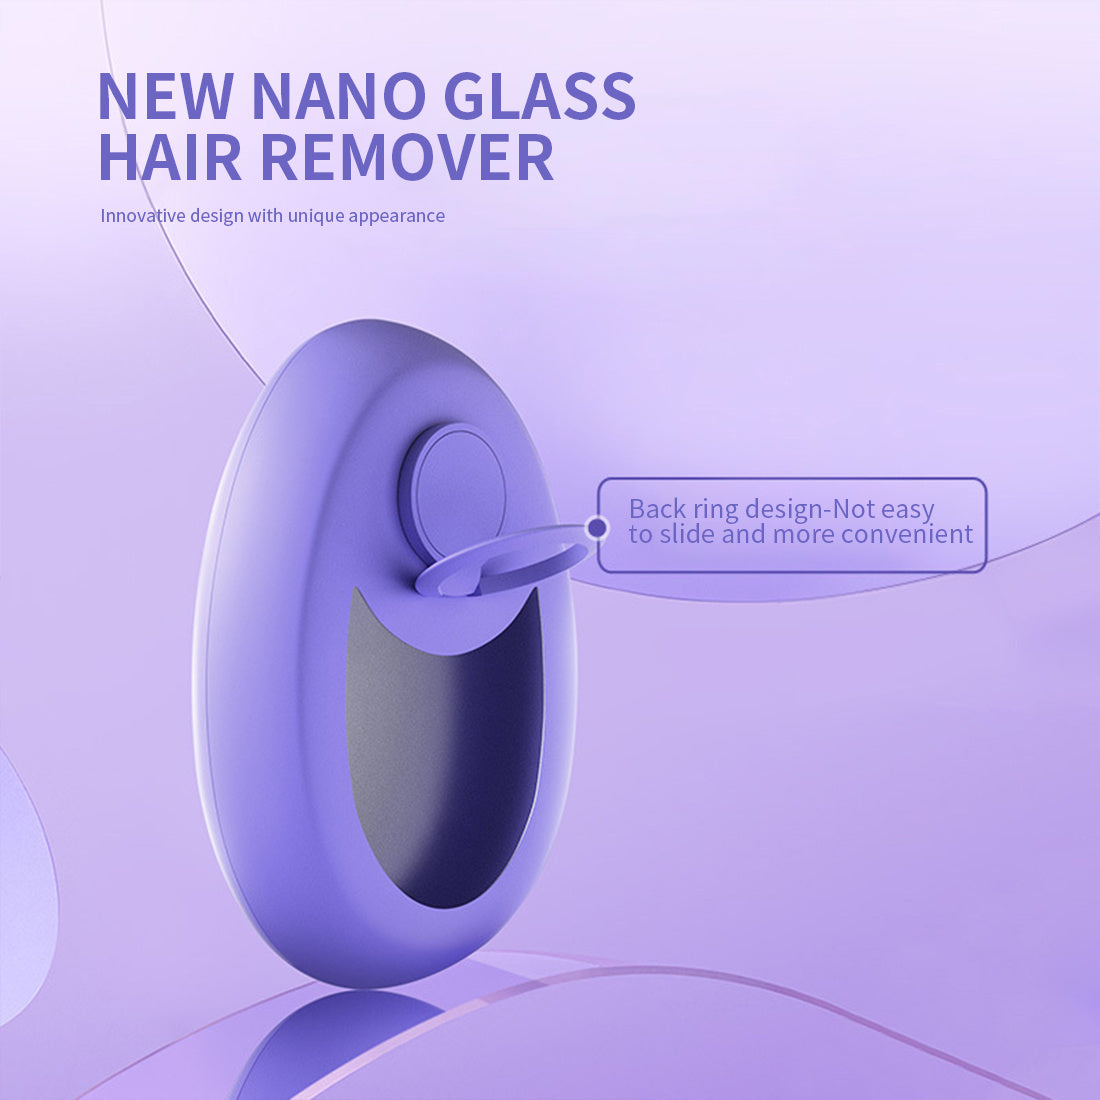 NANO GLASS Epilator - Hair Removal